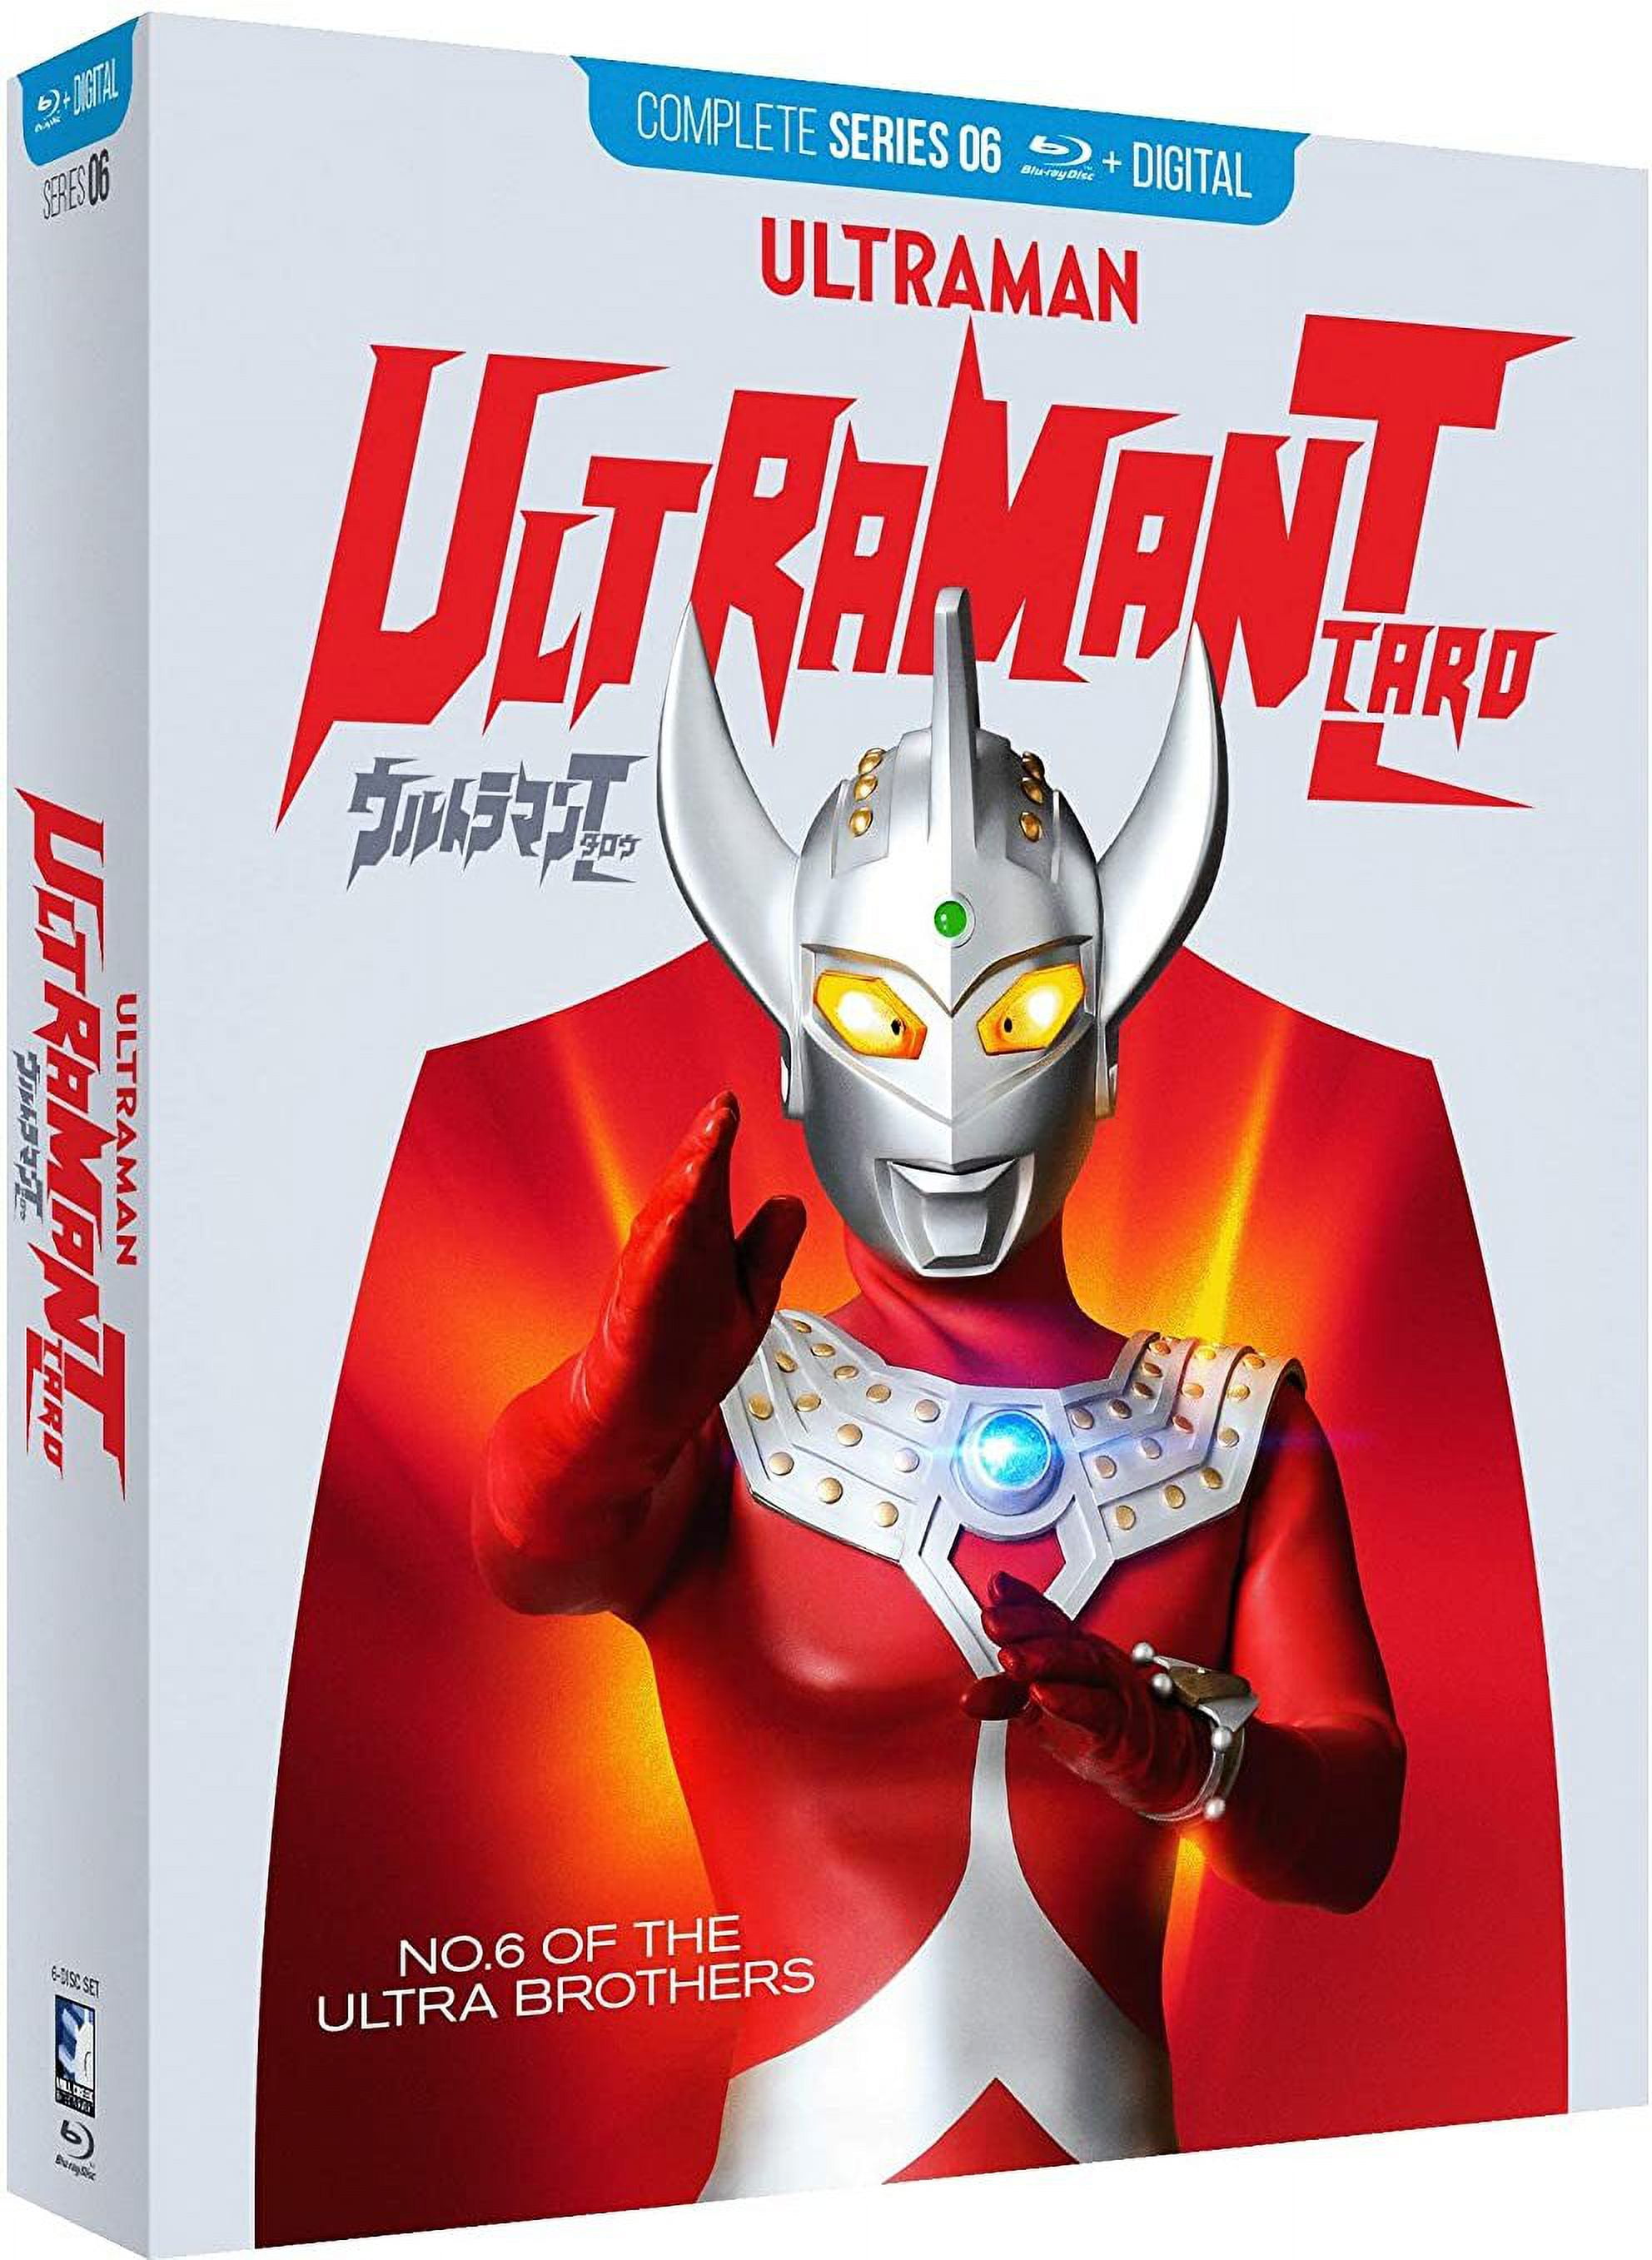 Ultraman Taro: Complete Series (Blu-ray) - Walmart.com